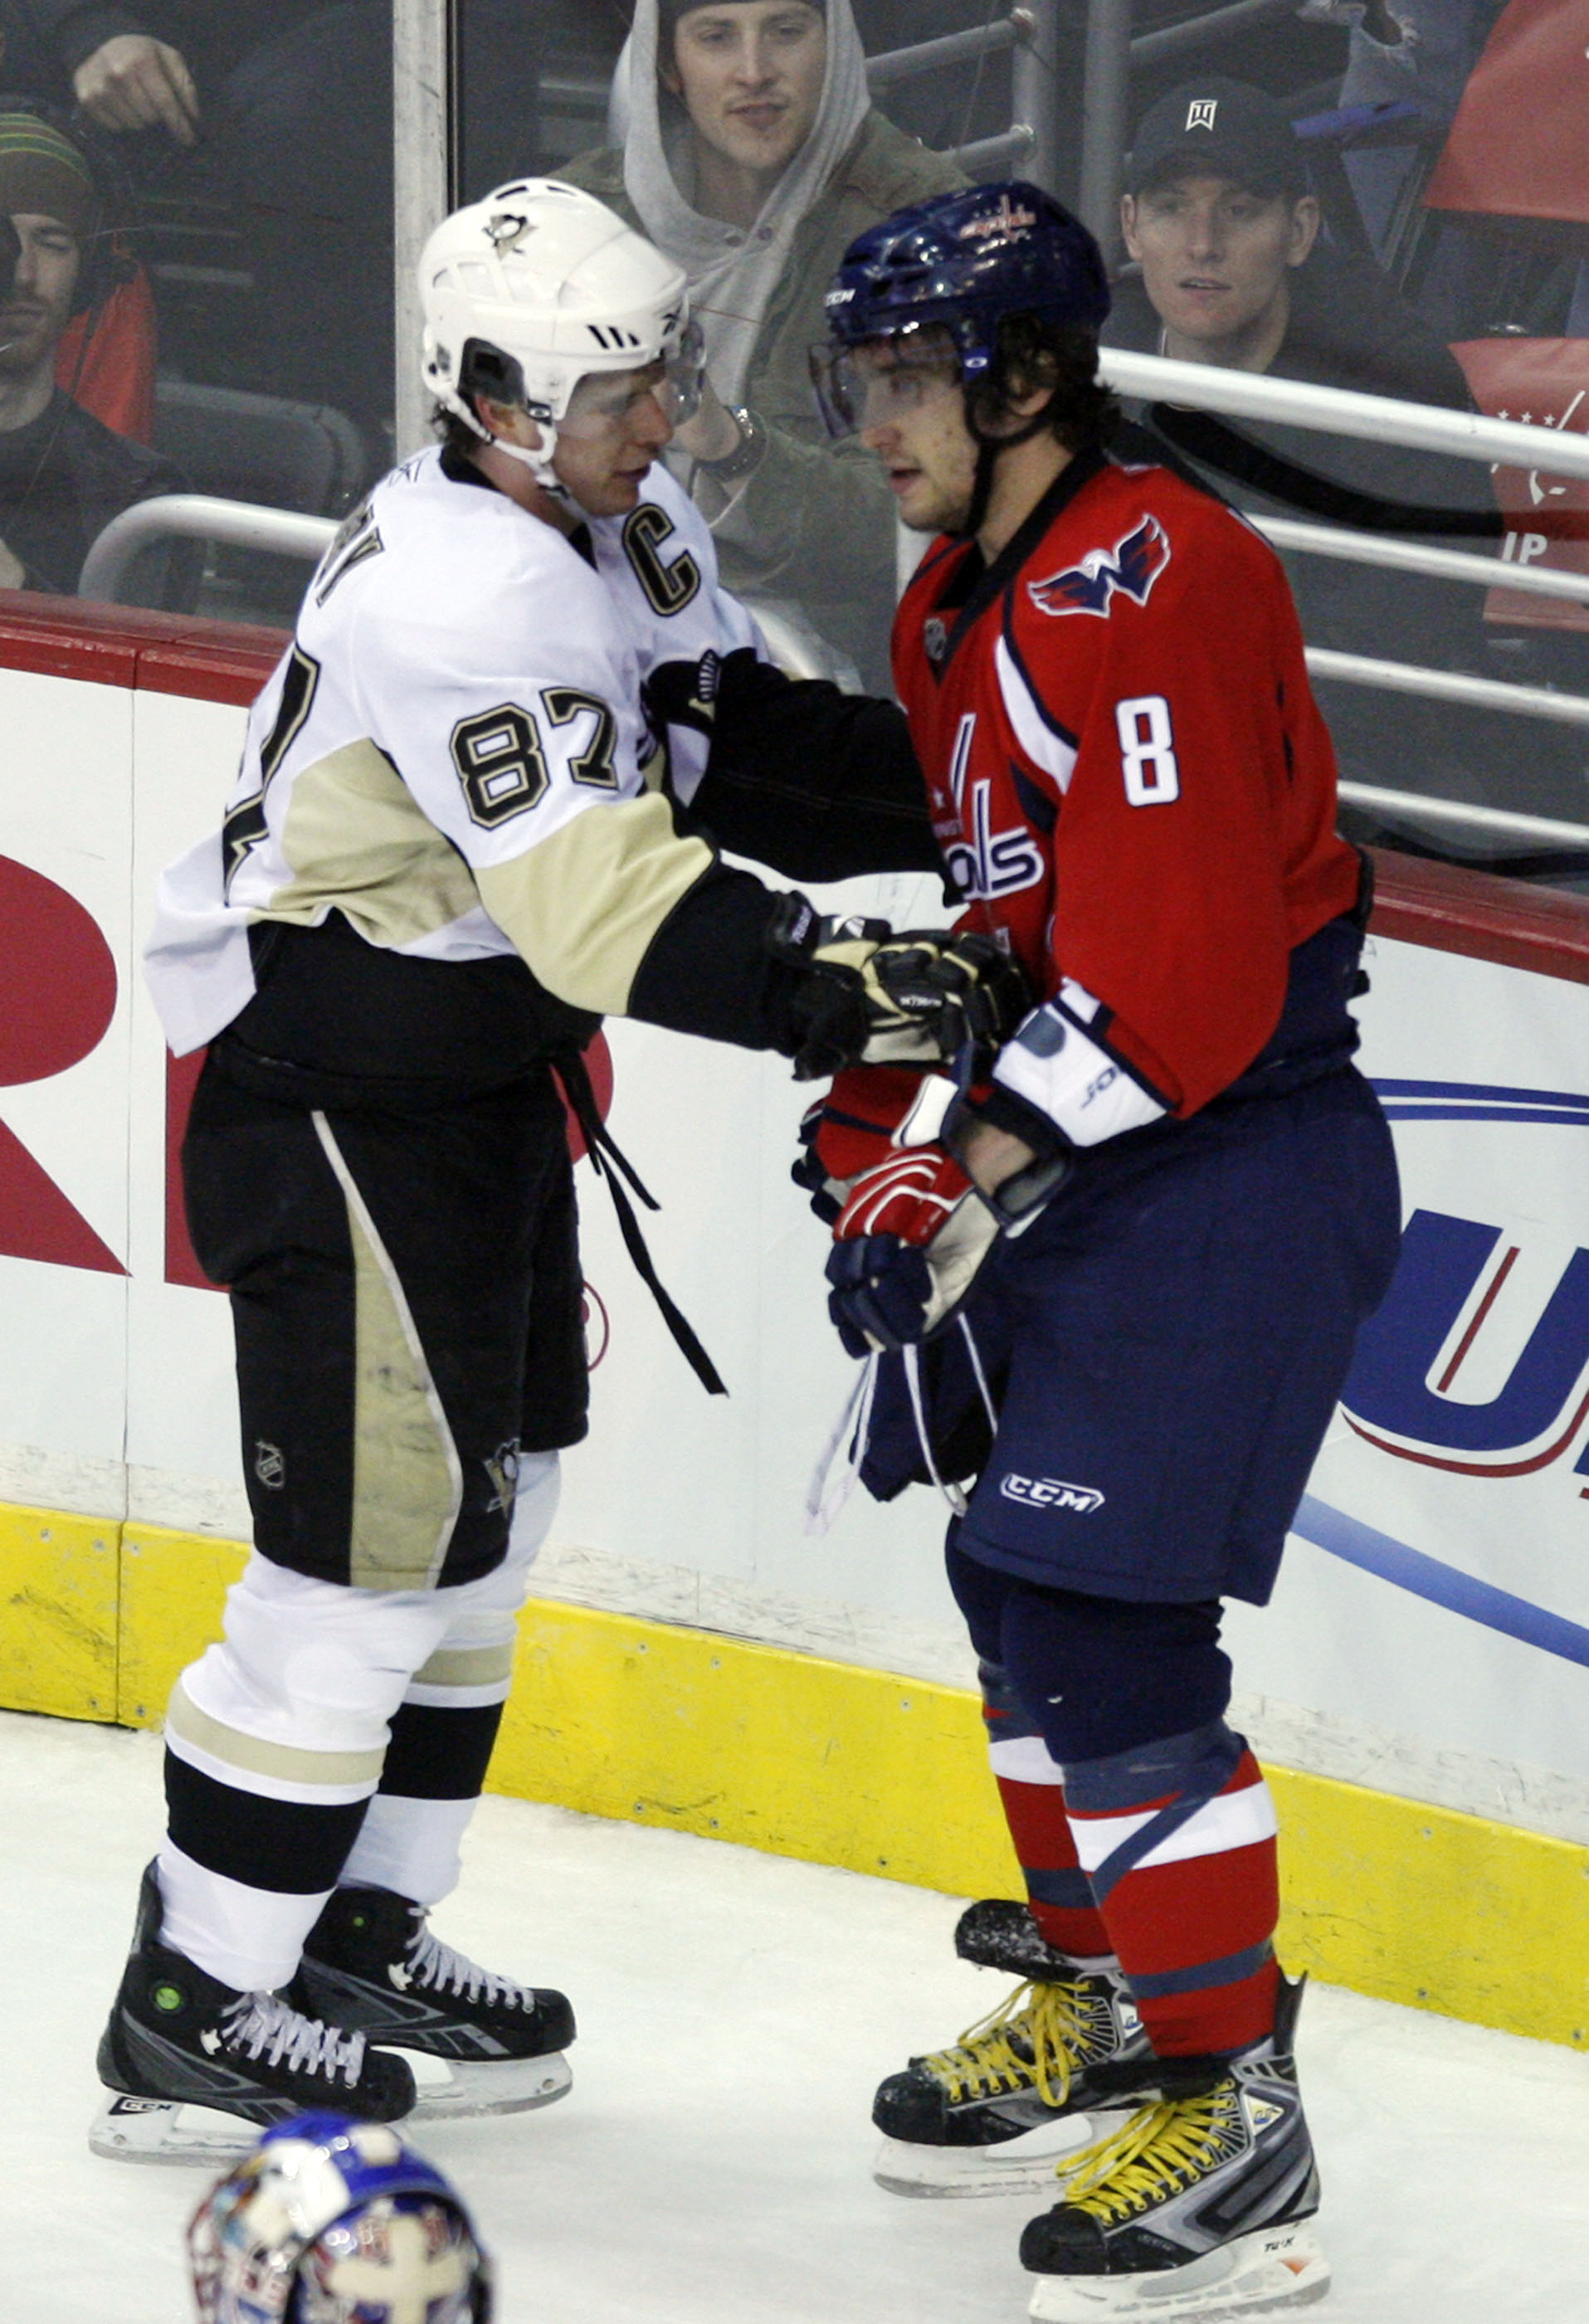 Crosby-Ovechkin: Hockey's hottest rivalry